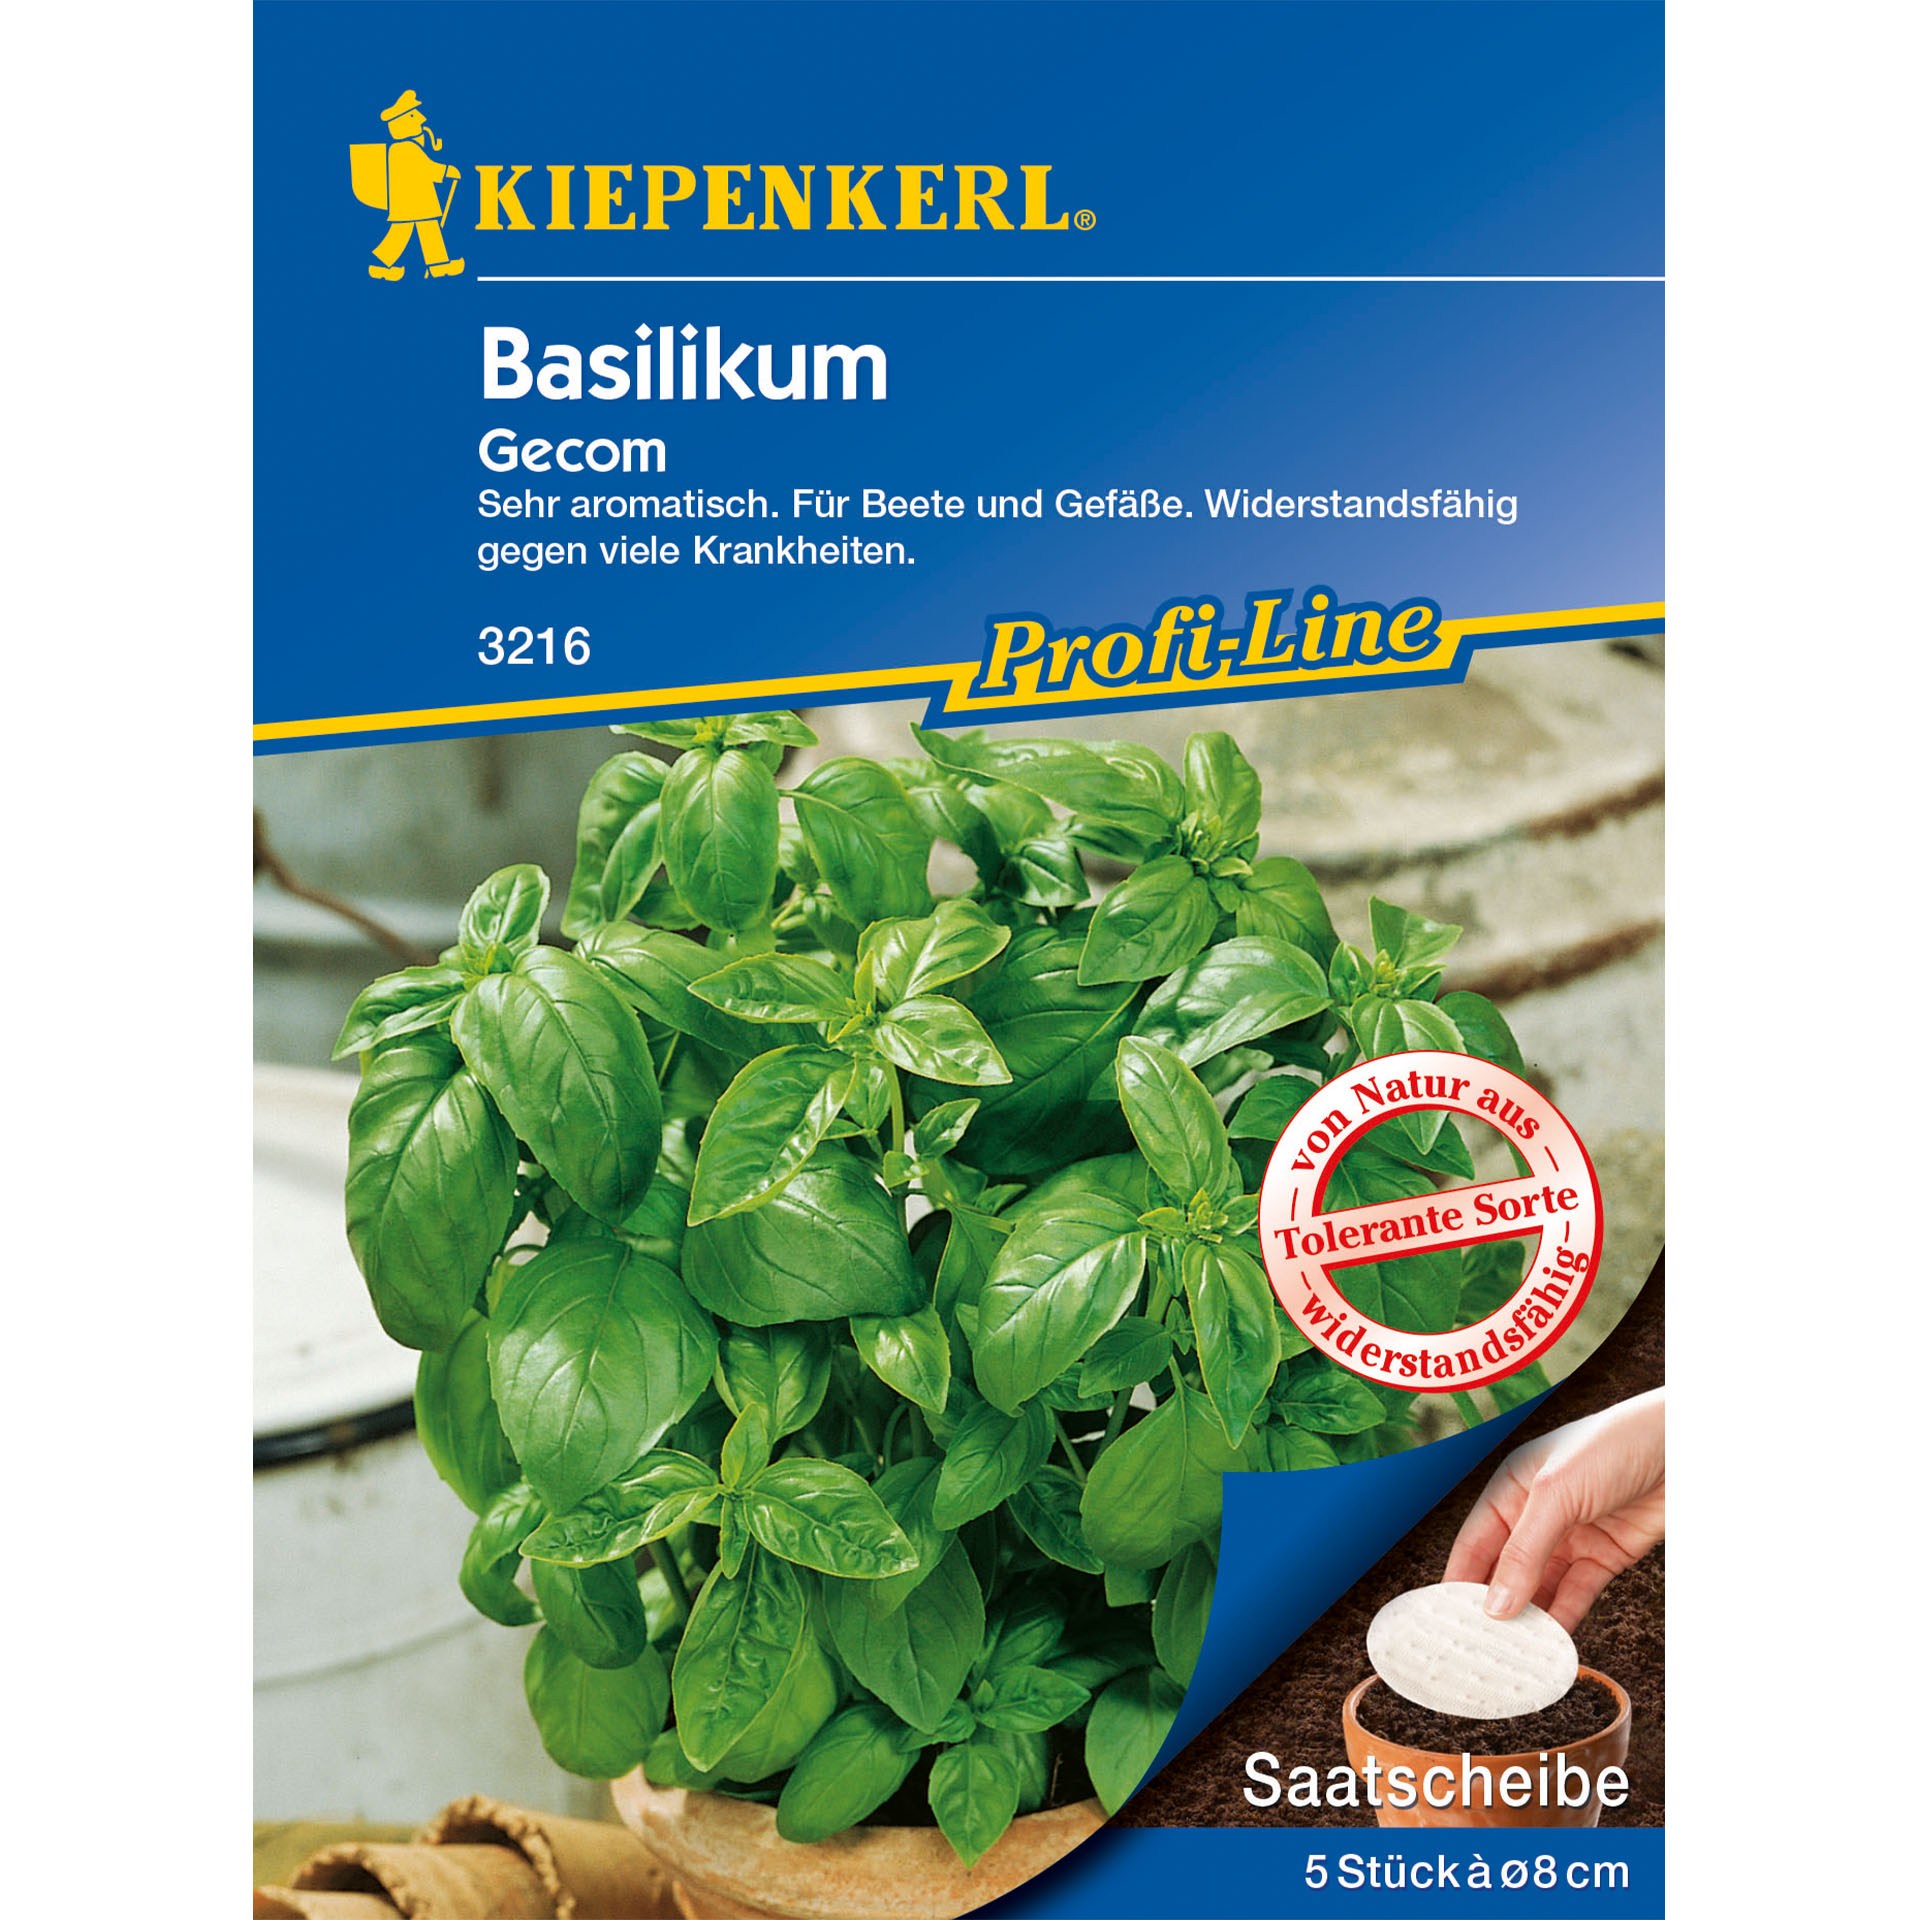 Basilikum Gecom Saatscheiben, Kräuter, Pflanze, Kräuterig, Werbung, Plakat